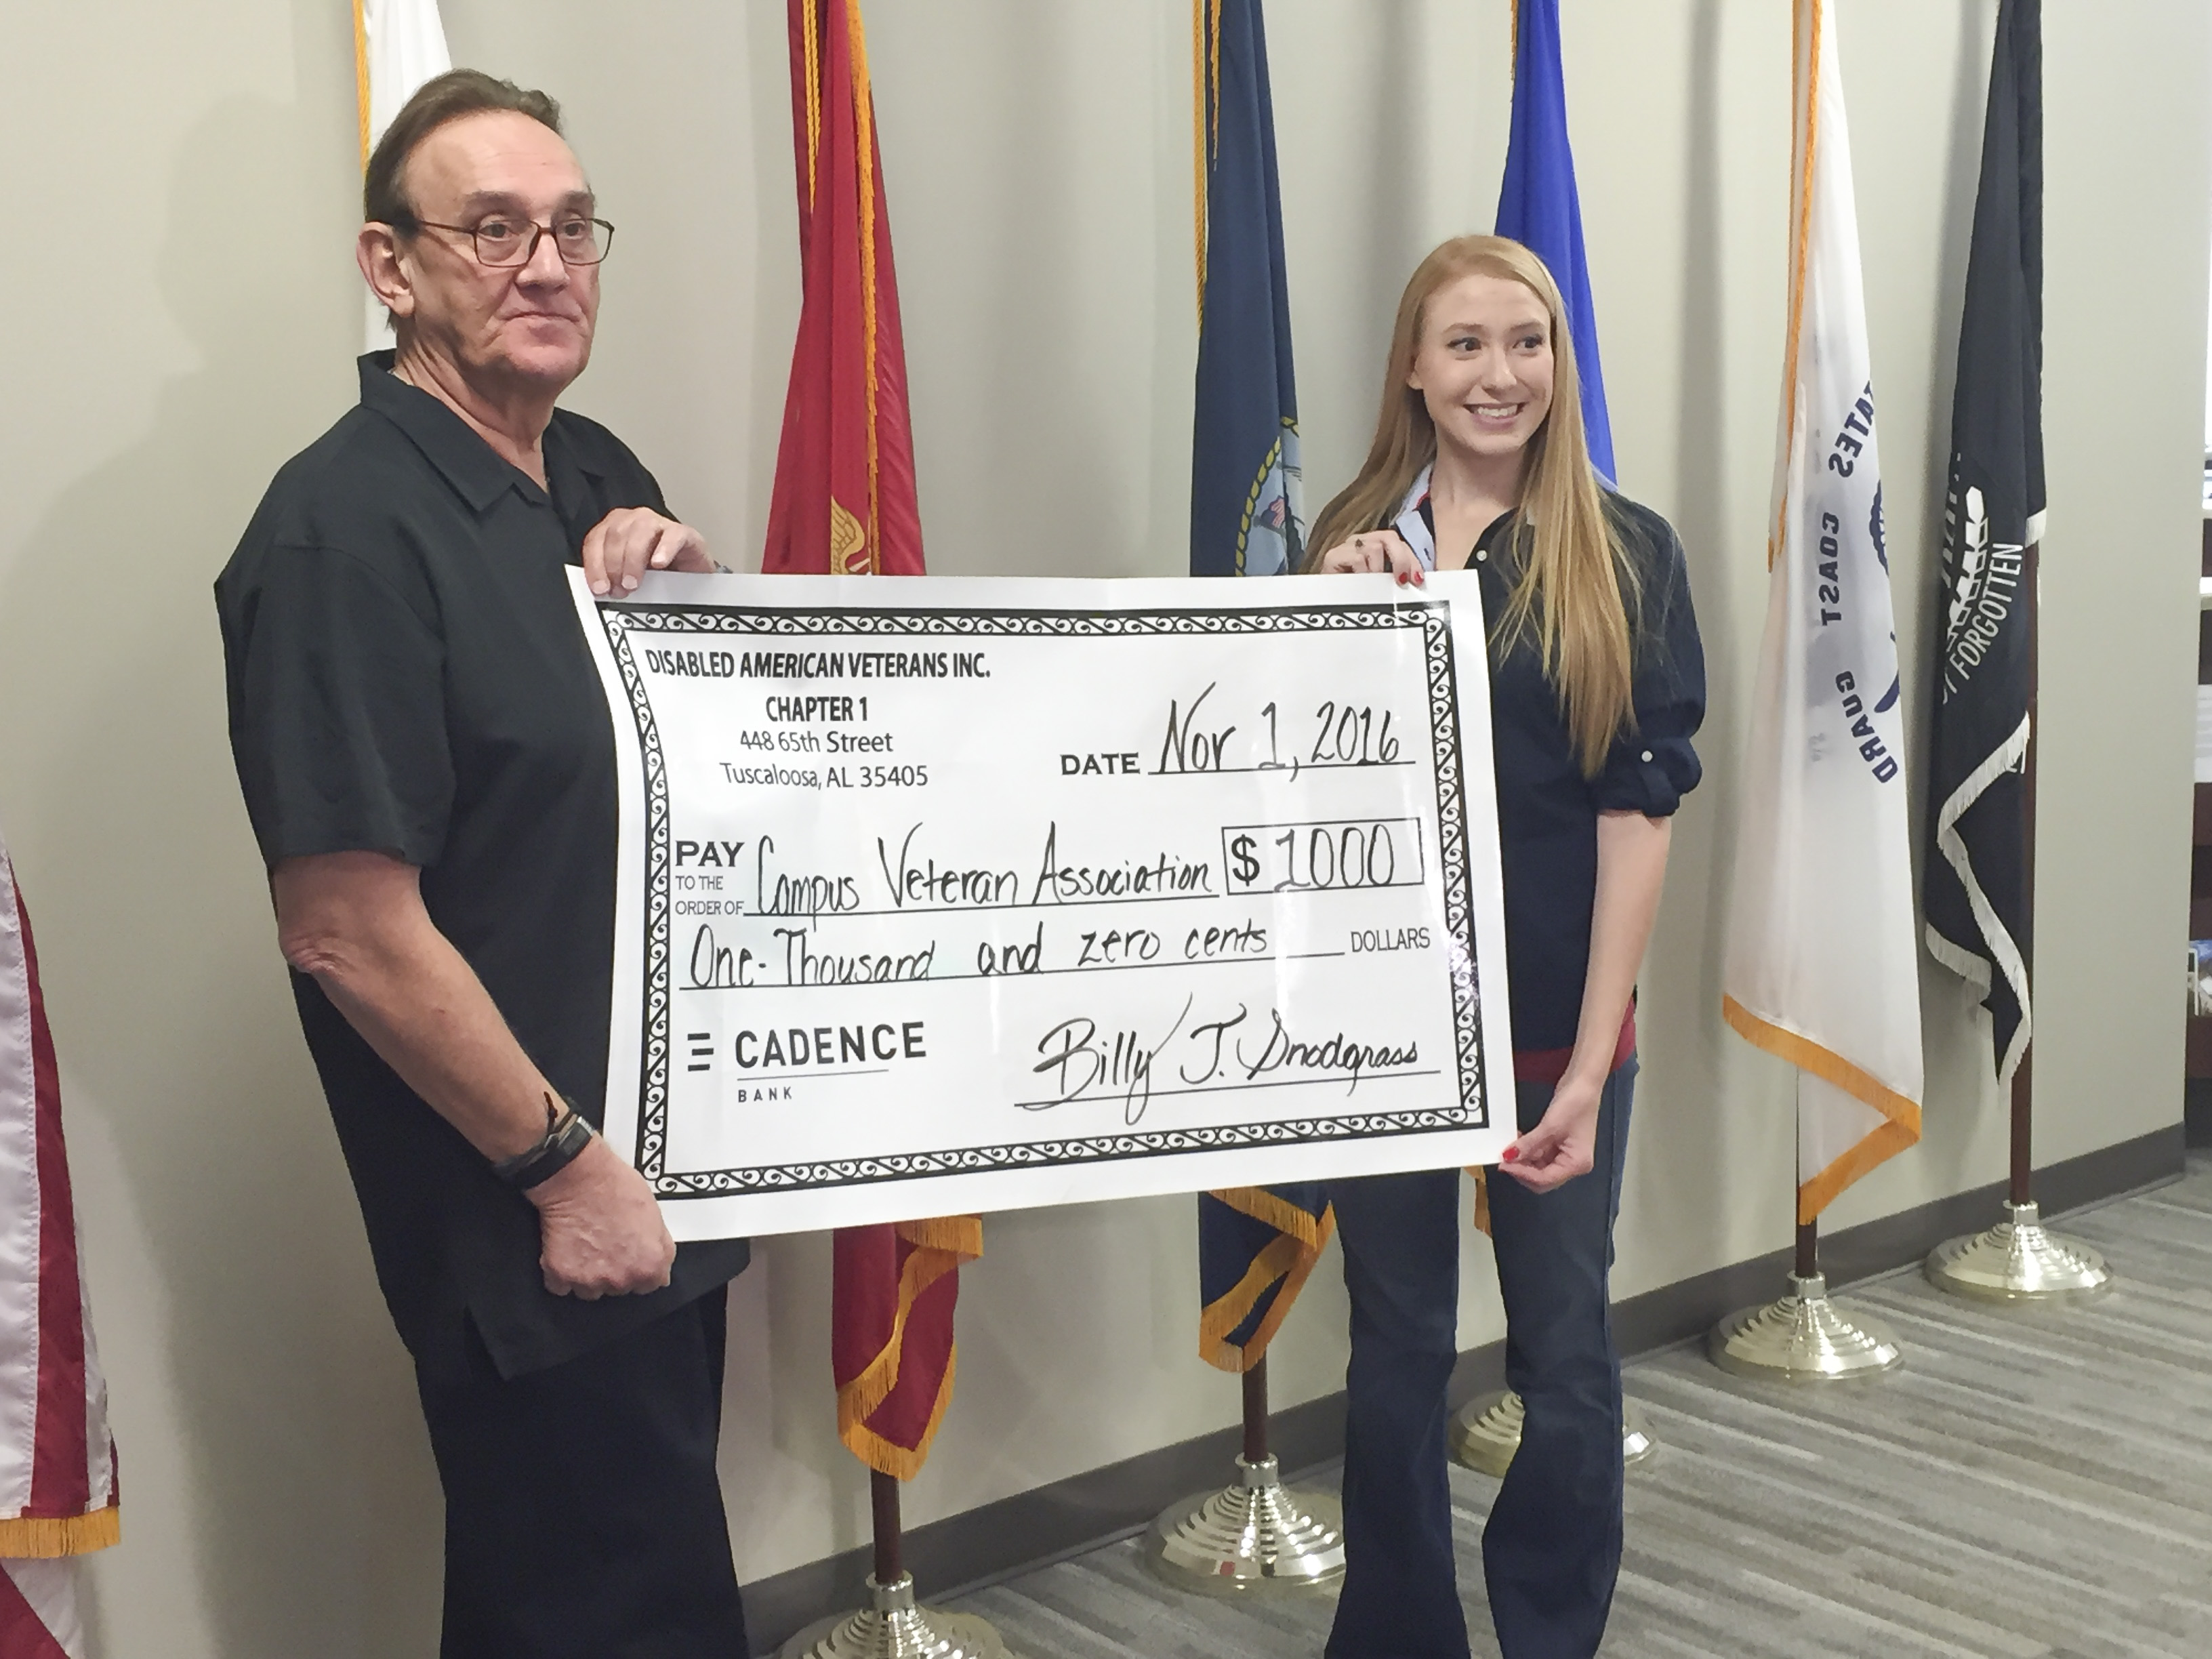 UA’s Campus Veterans Association Provides Veterans Support